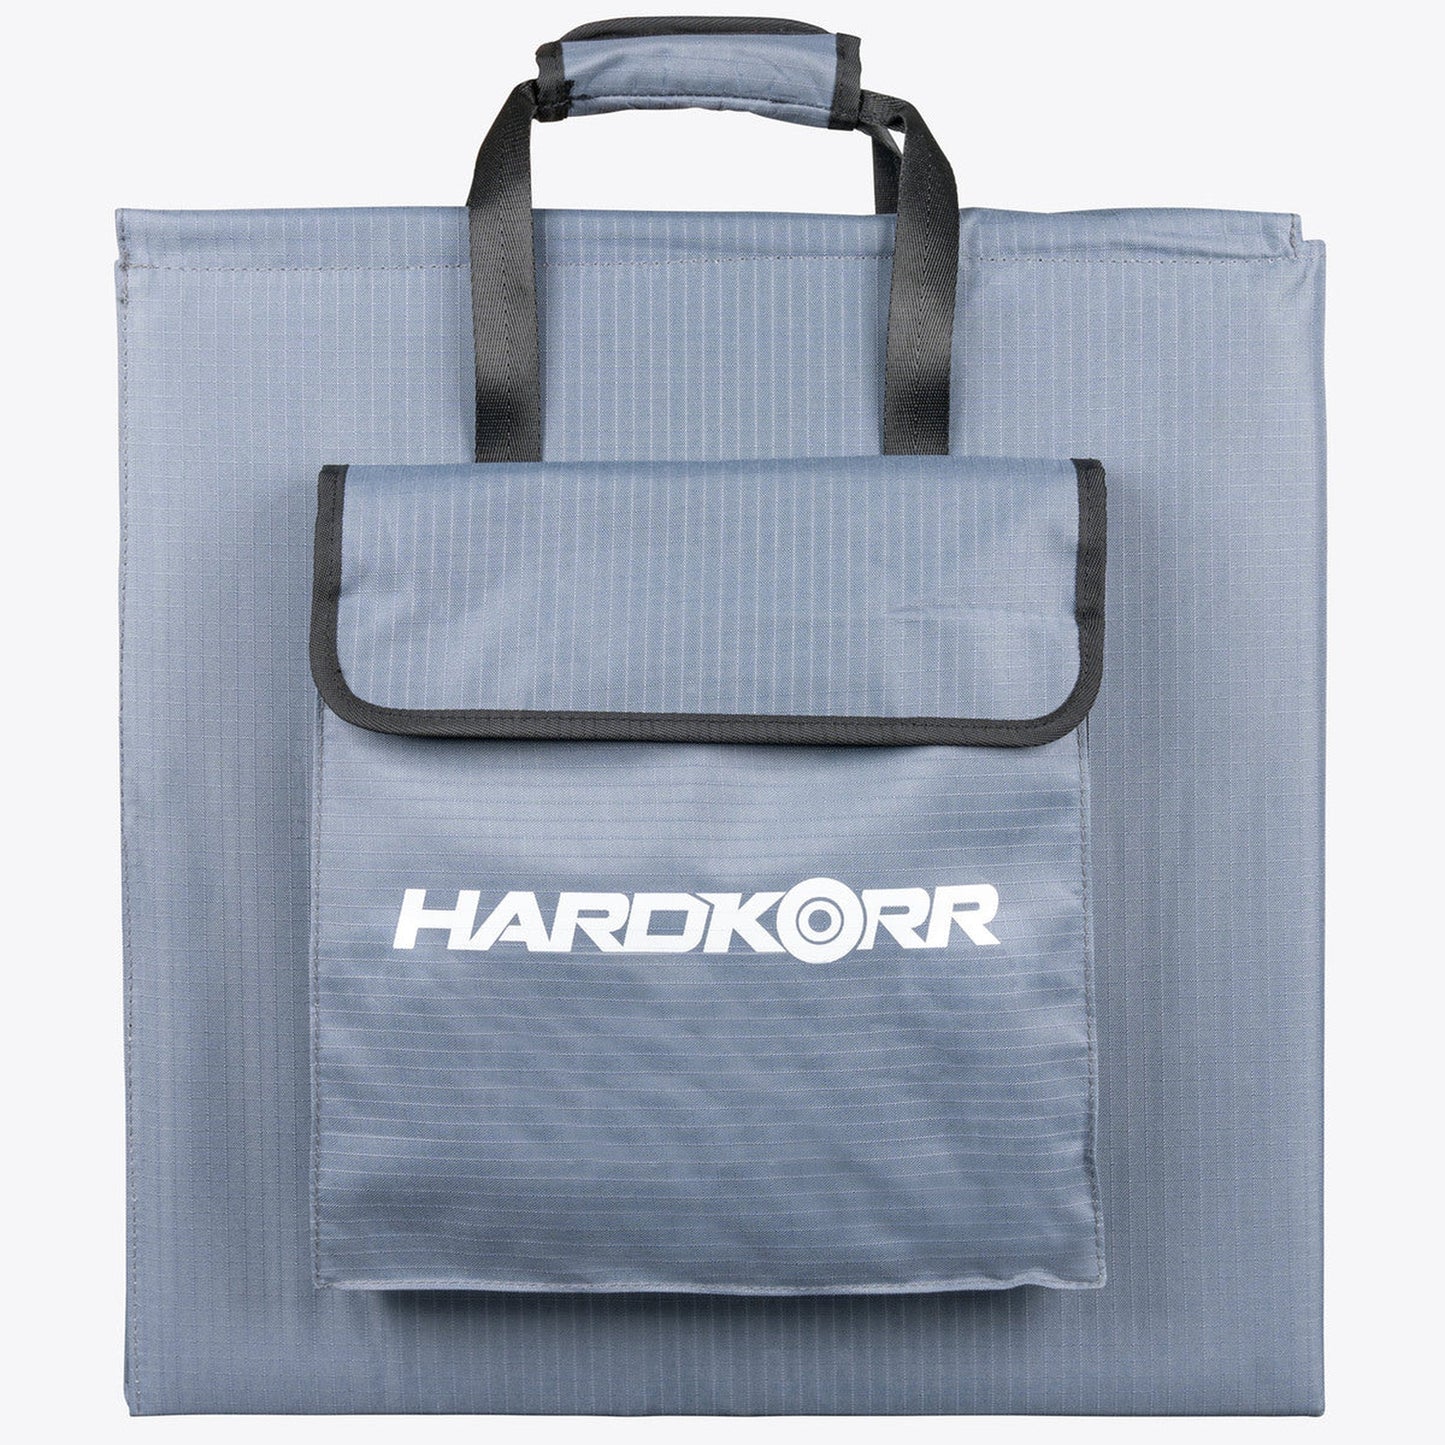 Hardkorr Lifestyle 200W Portable Solar Blanket